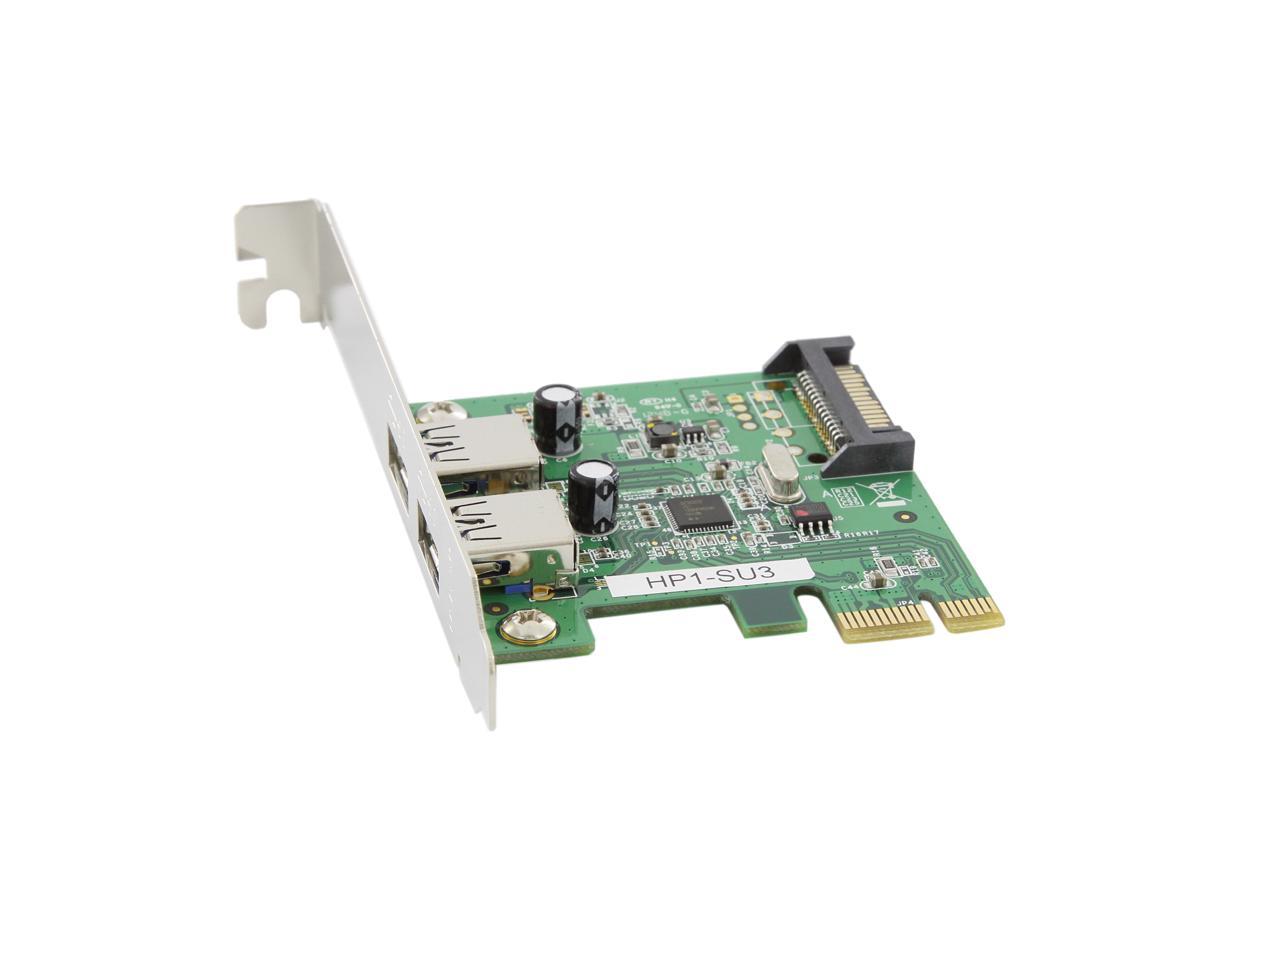 Mediasonic USB 3.0 PCI Express Card HP1-SU3 